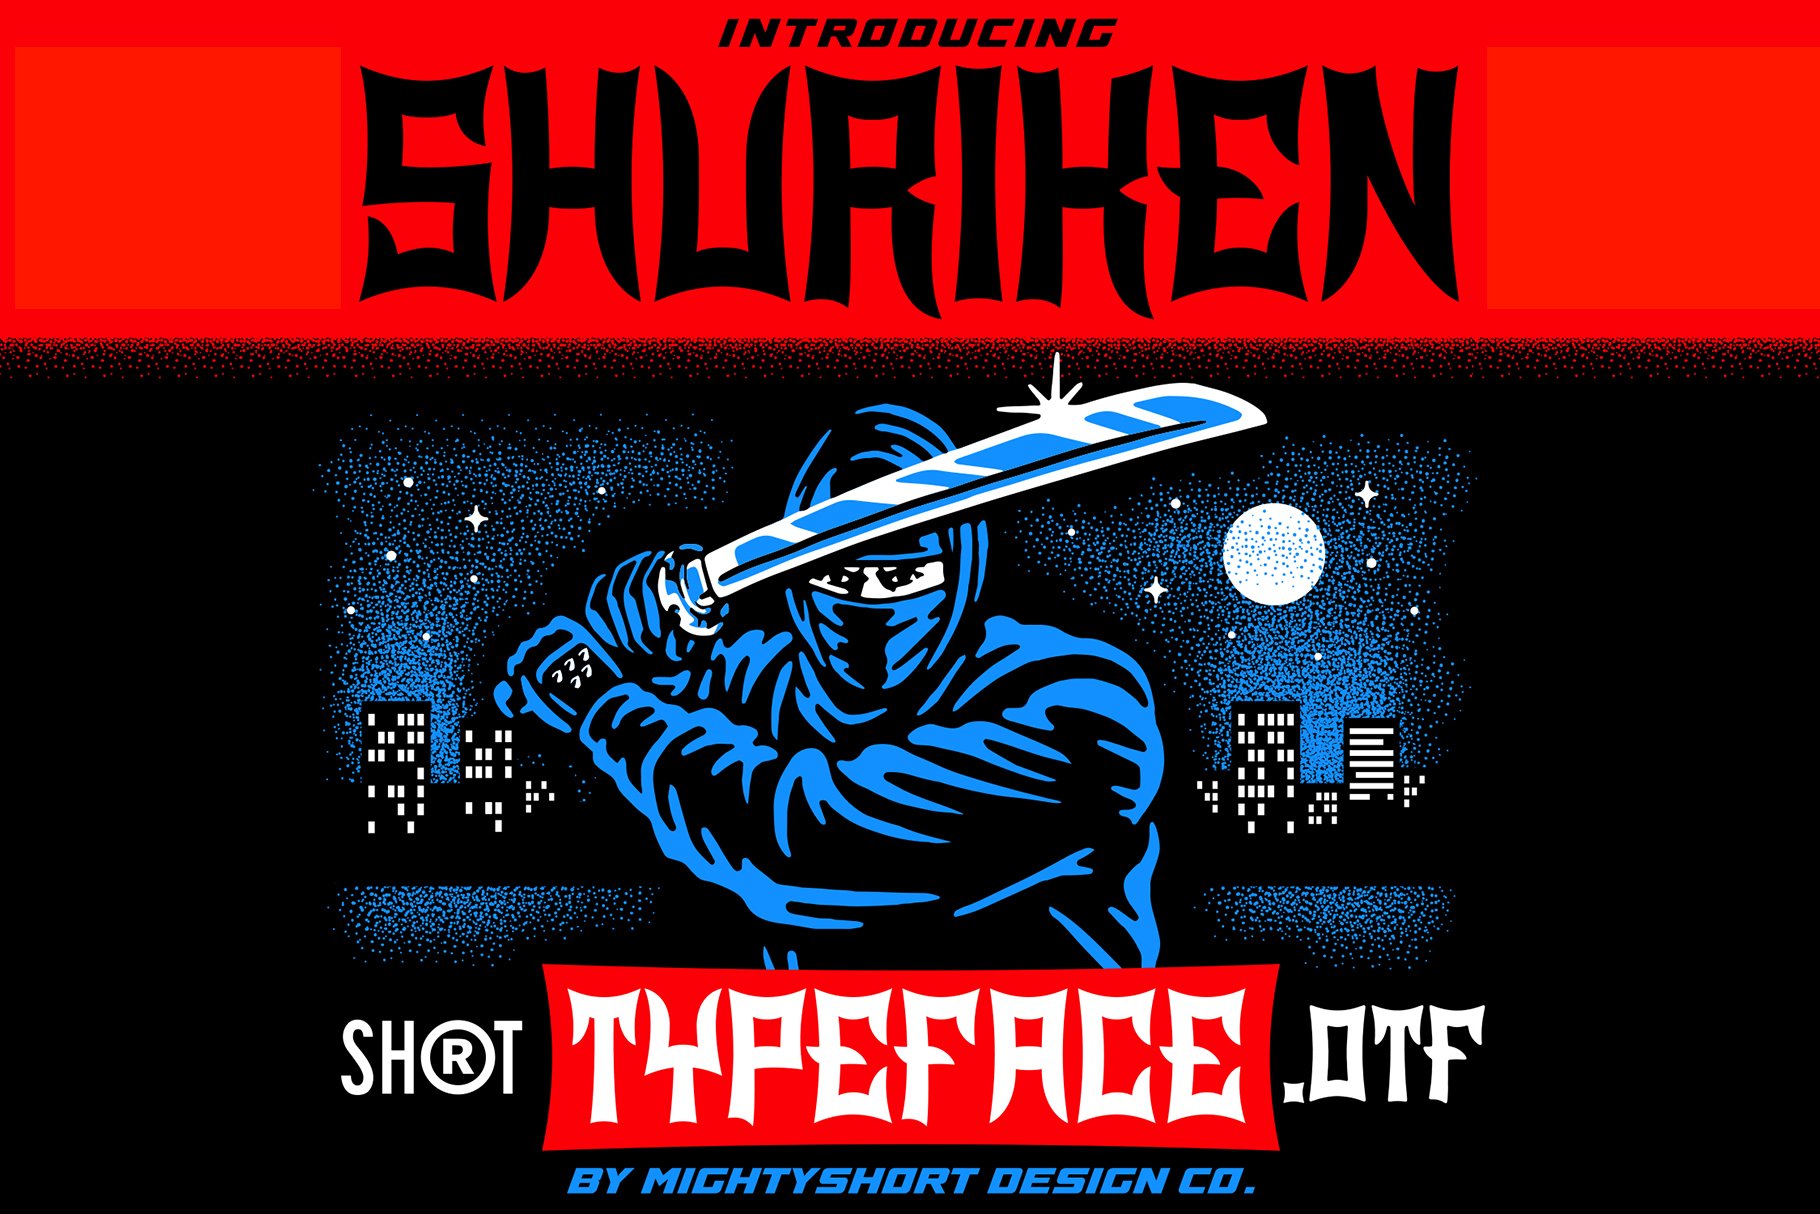 Shuriken Typeface cover image.